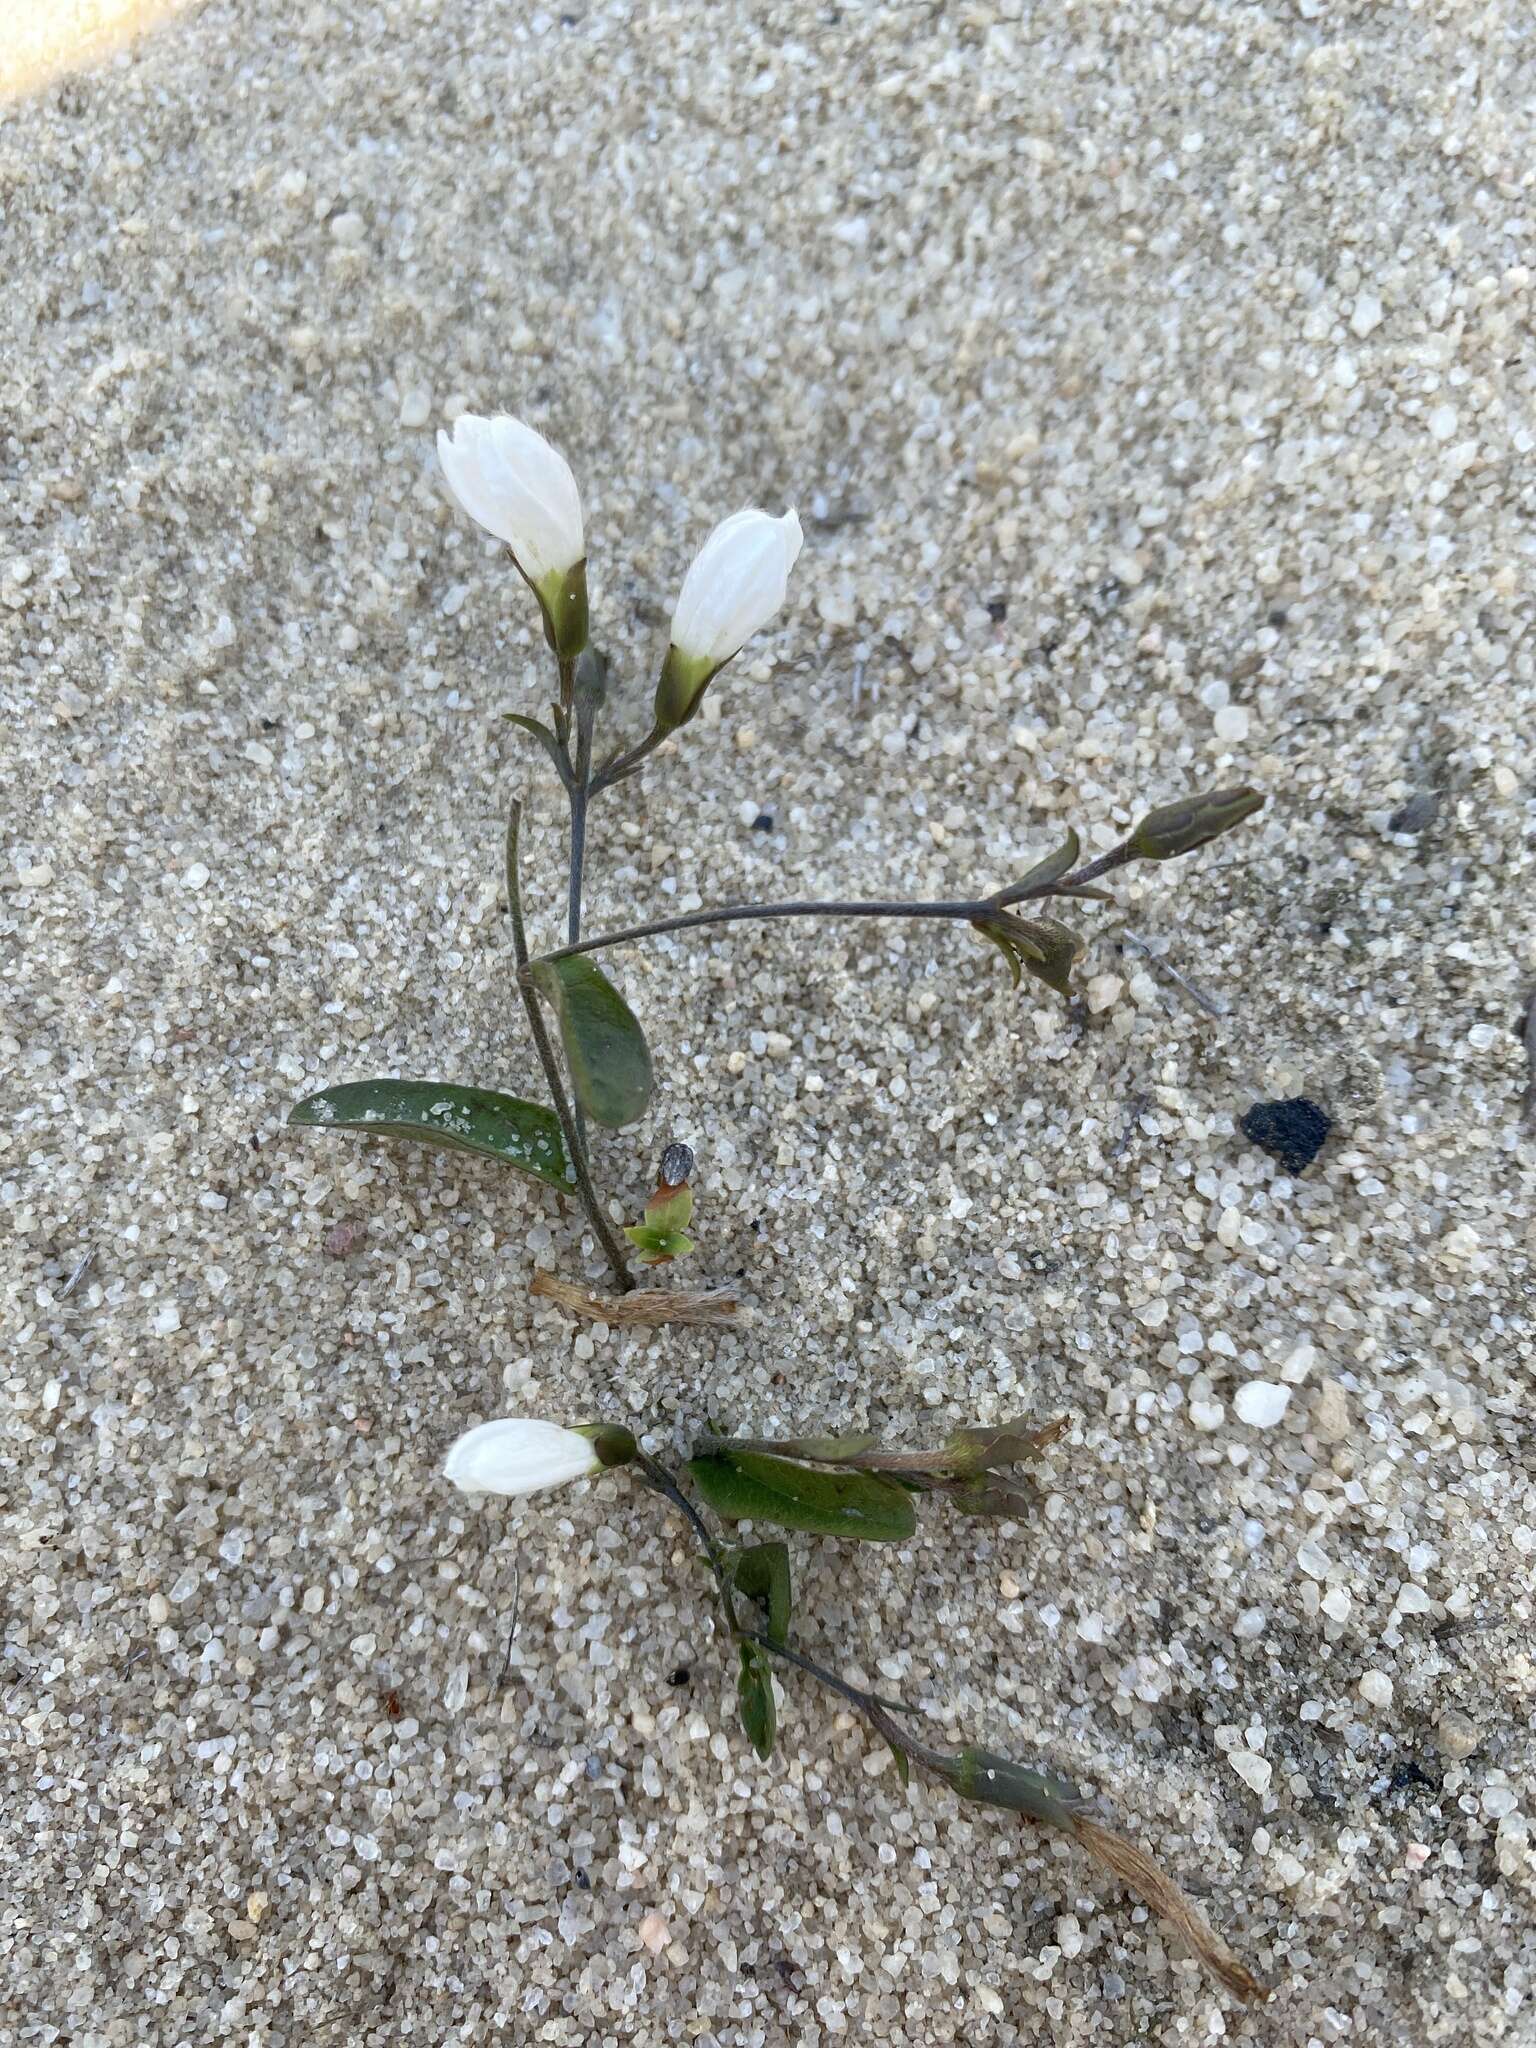 Image of coastal plain dawnflower